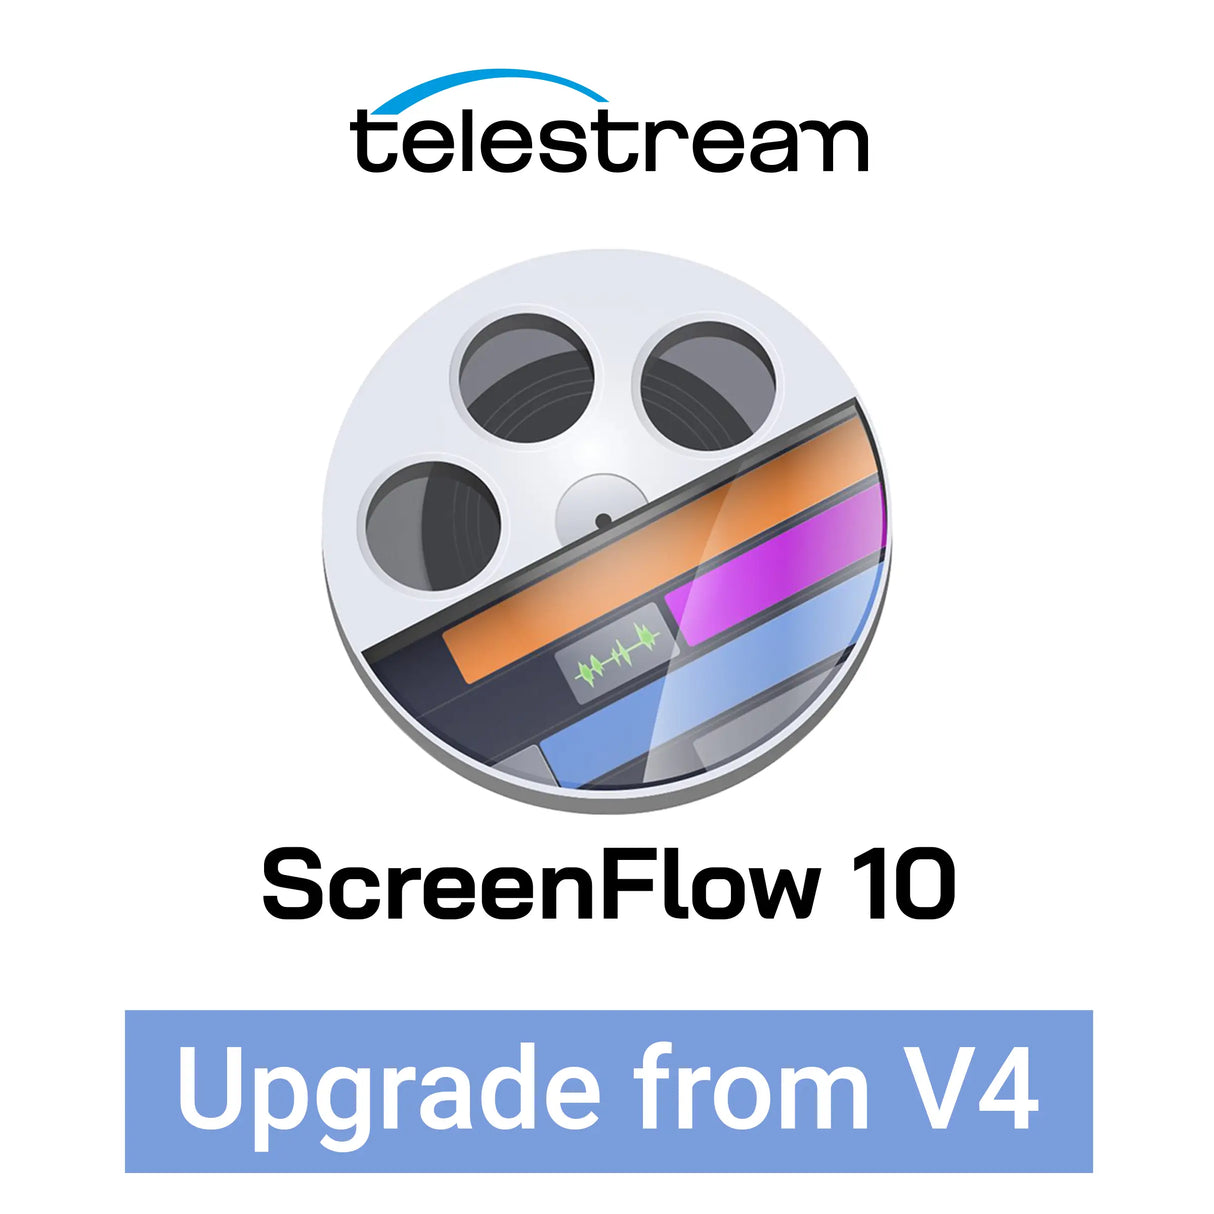 Telestream ScreenFlow 10 Video Editing Software Upgrade from V4